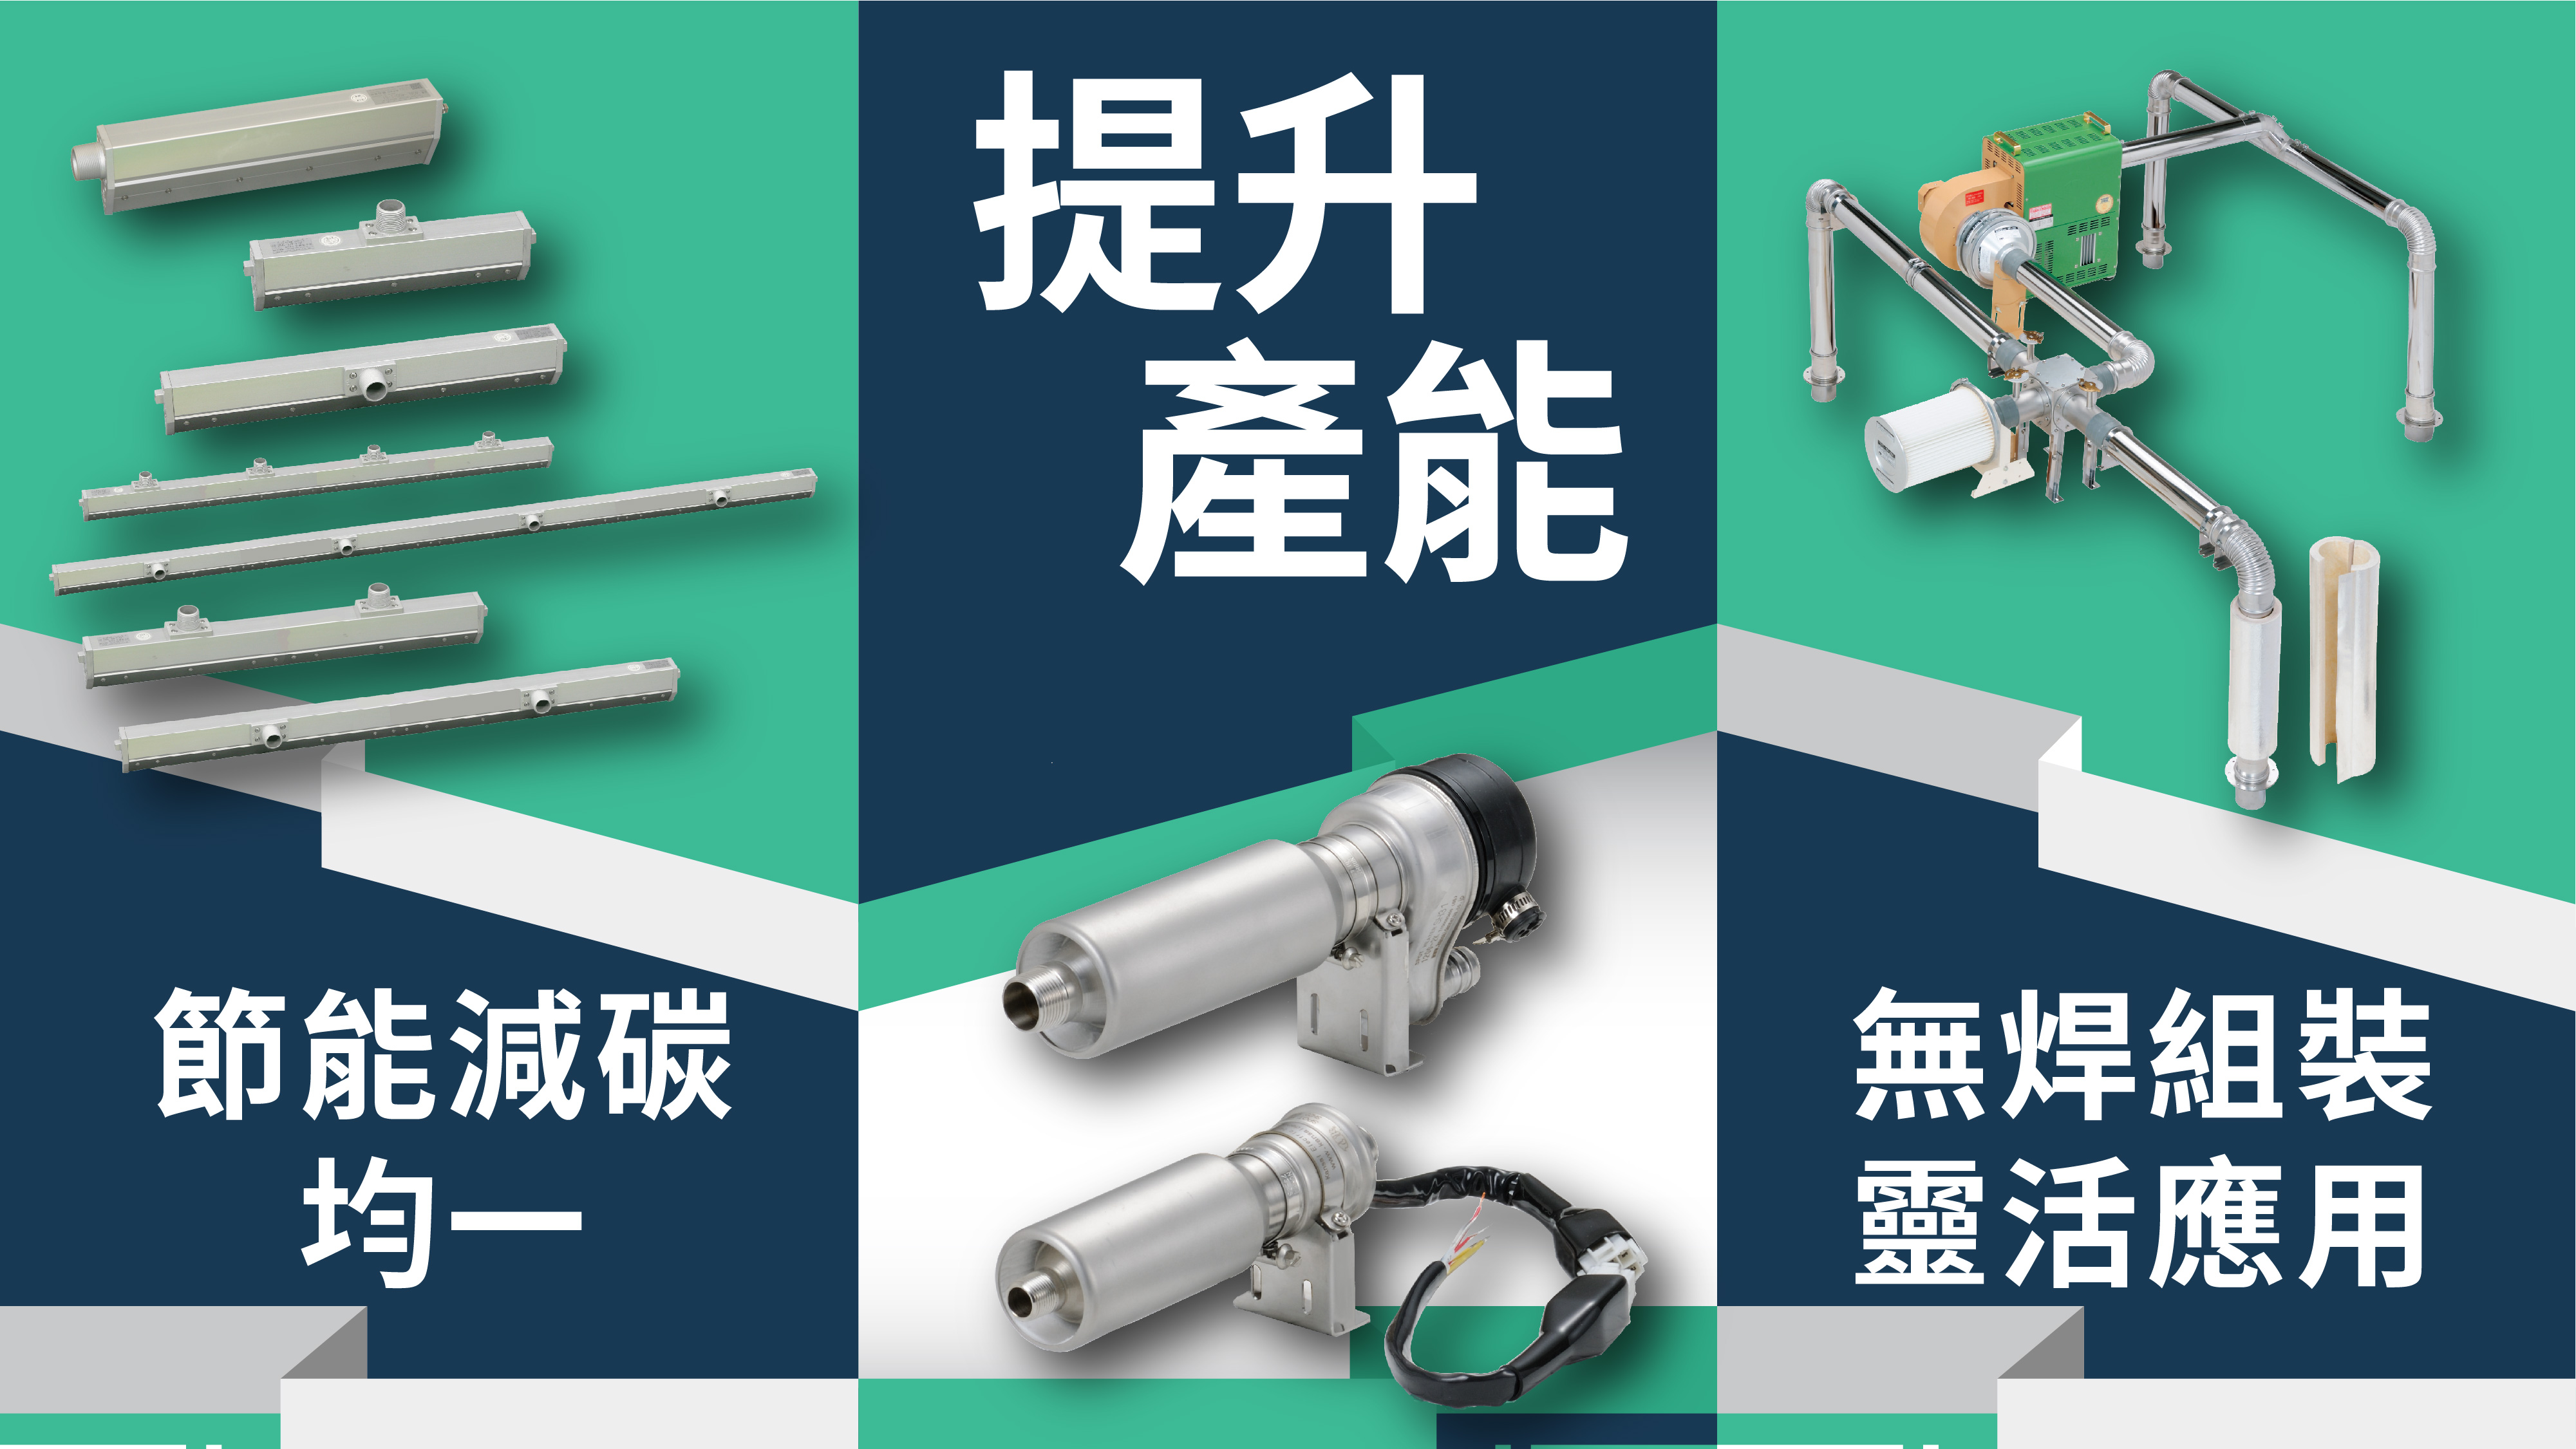 Da-Cei Company  Air Knife Products